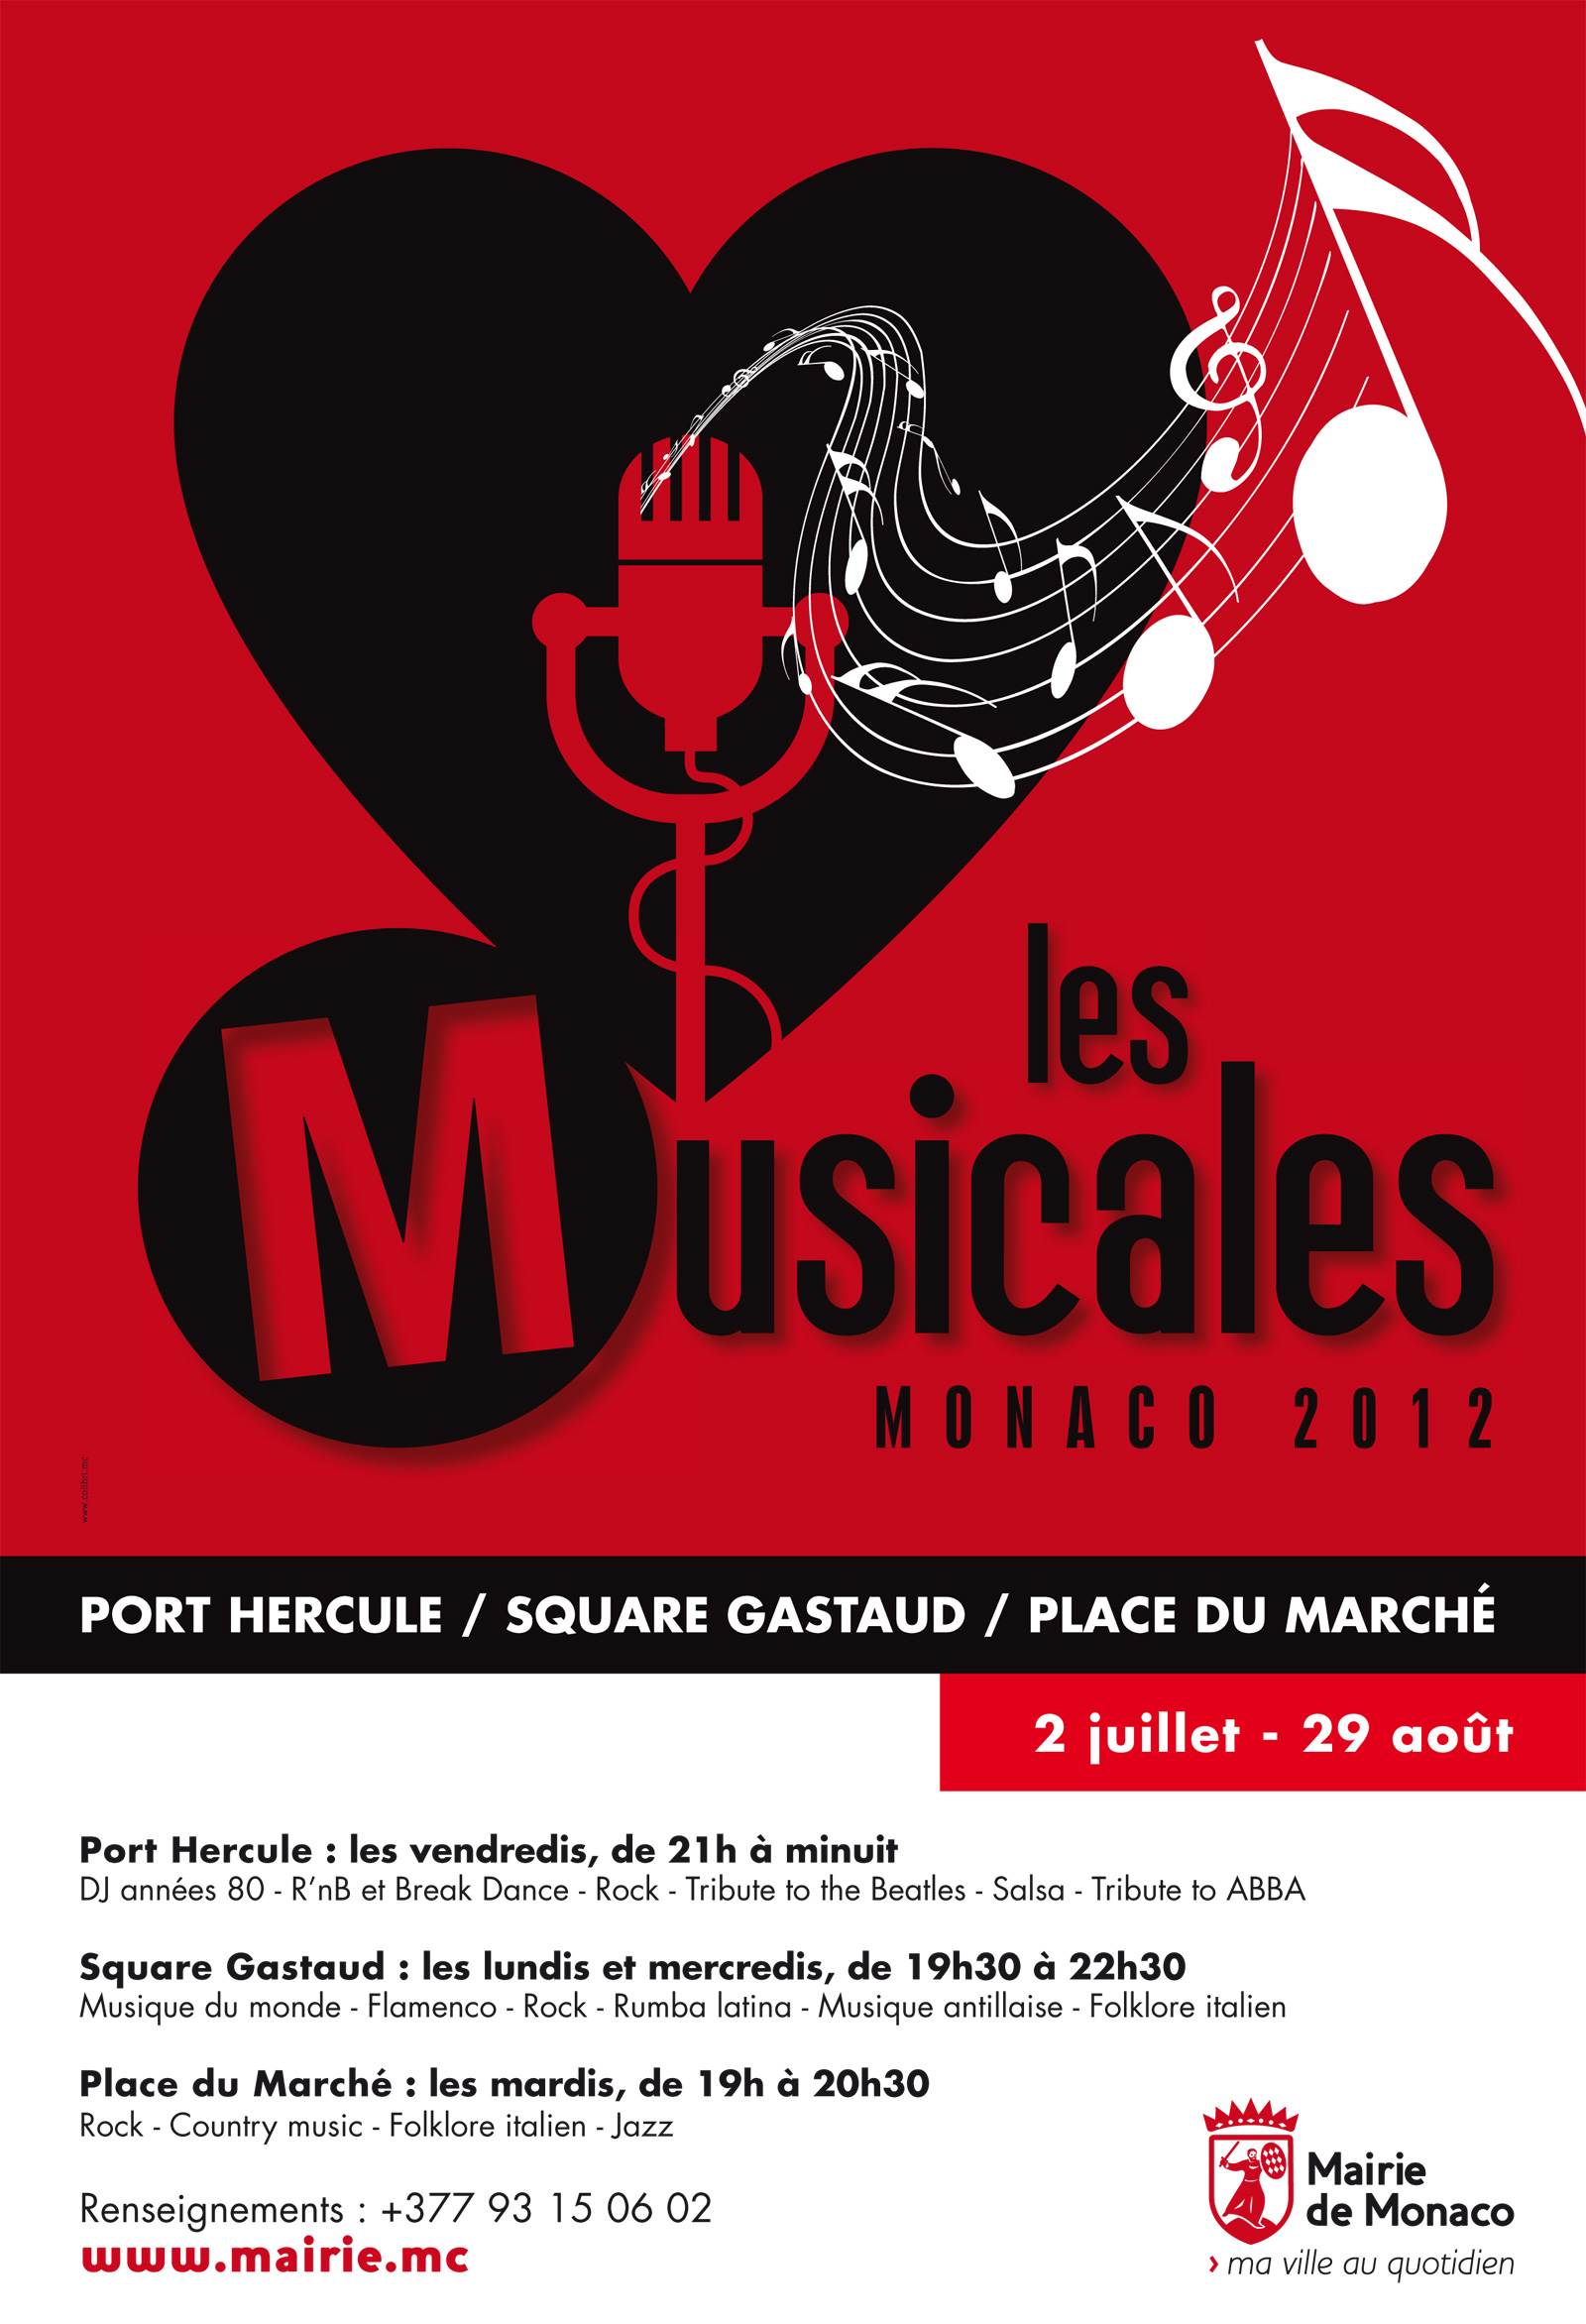 U Sciaratu - Agence Colibri, Design, Publicité, Web - Campagne de communication Les Musicales